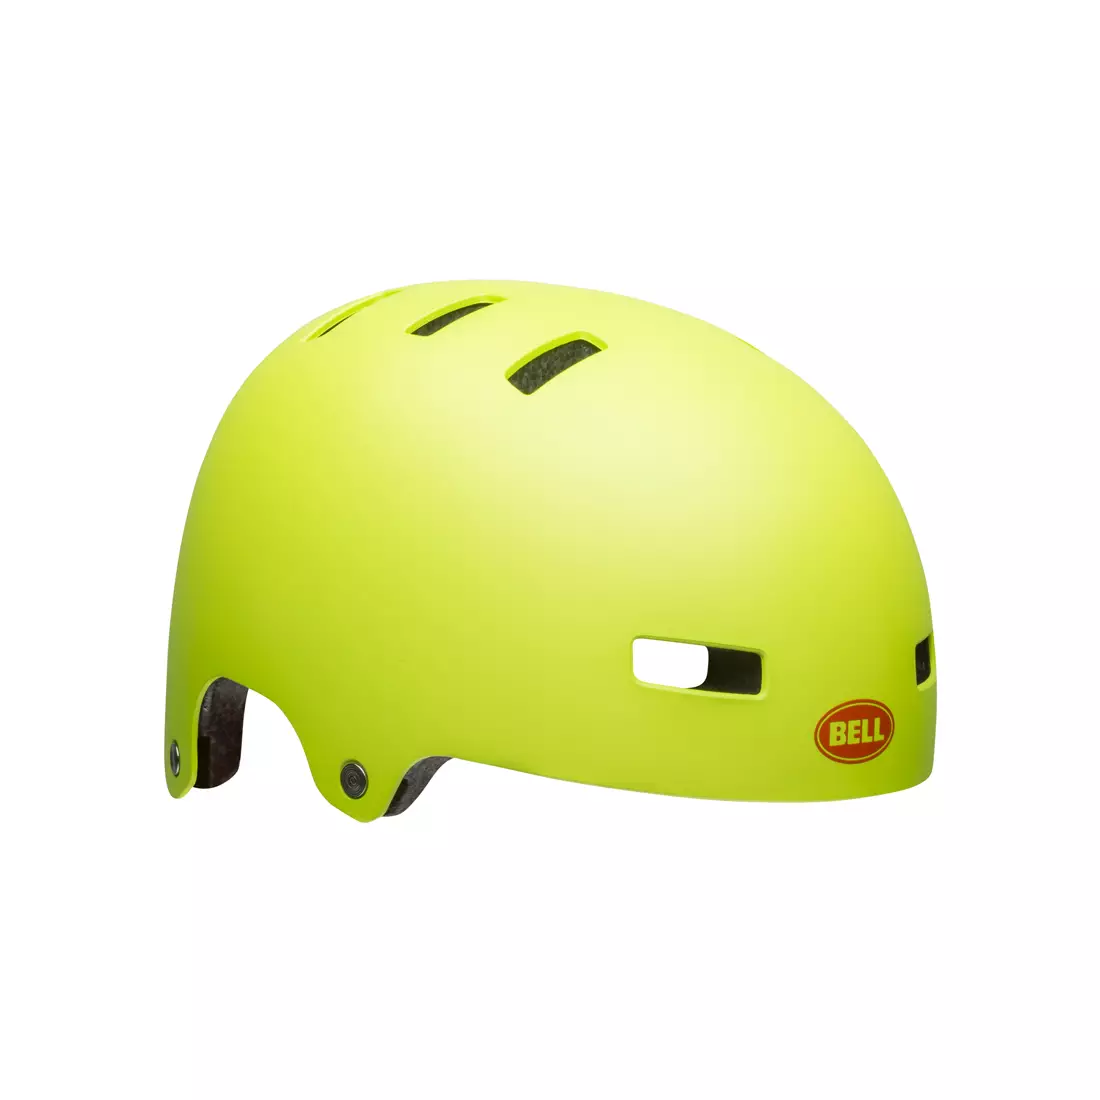 BELL SPAN cască de bicicletă junior matte bright green